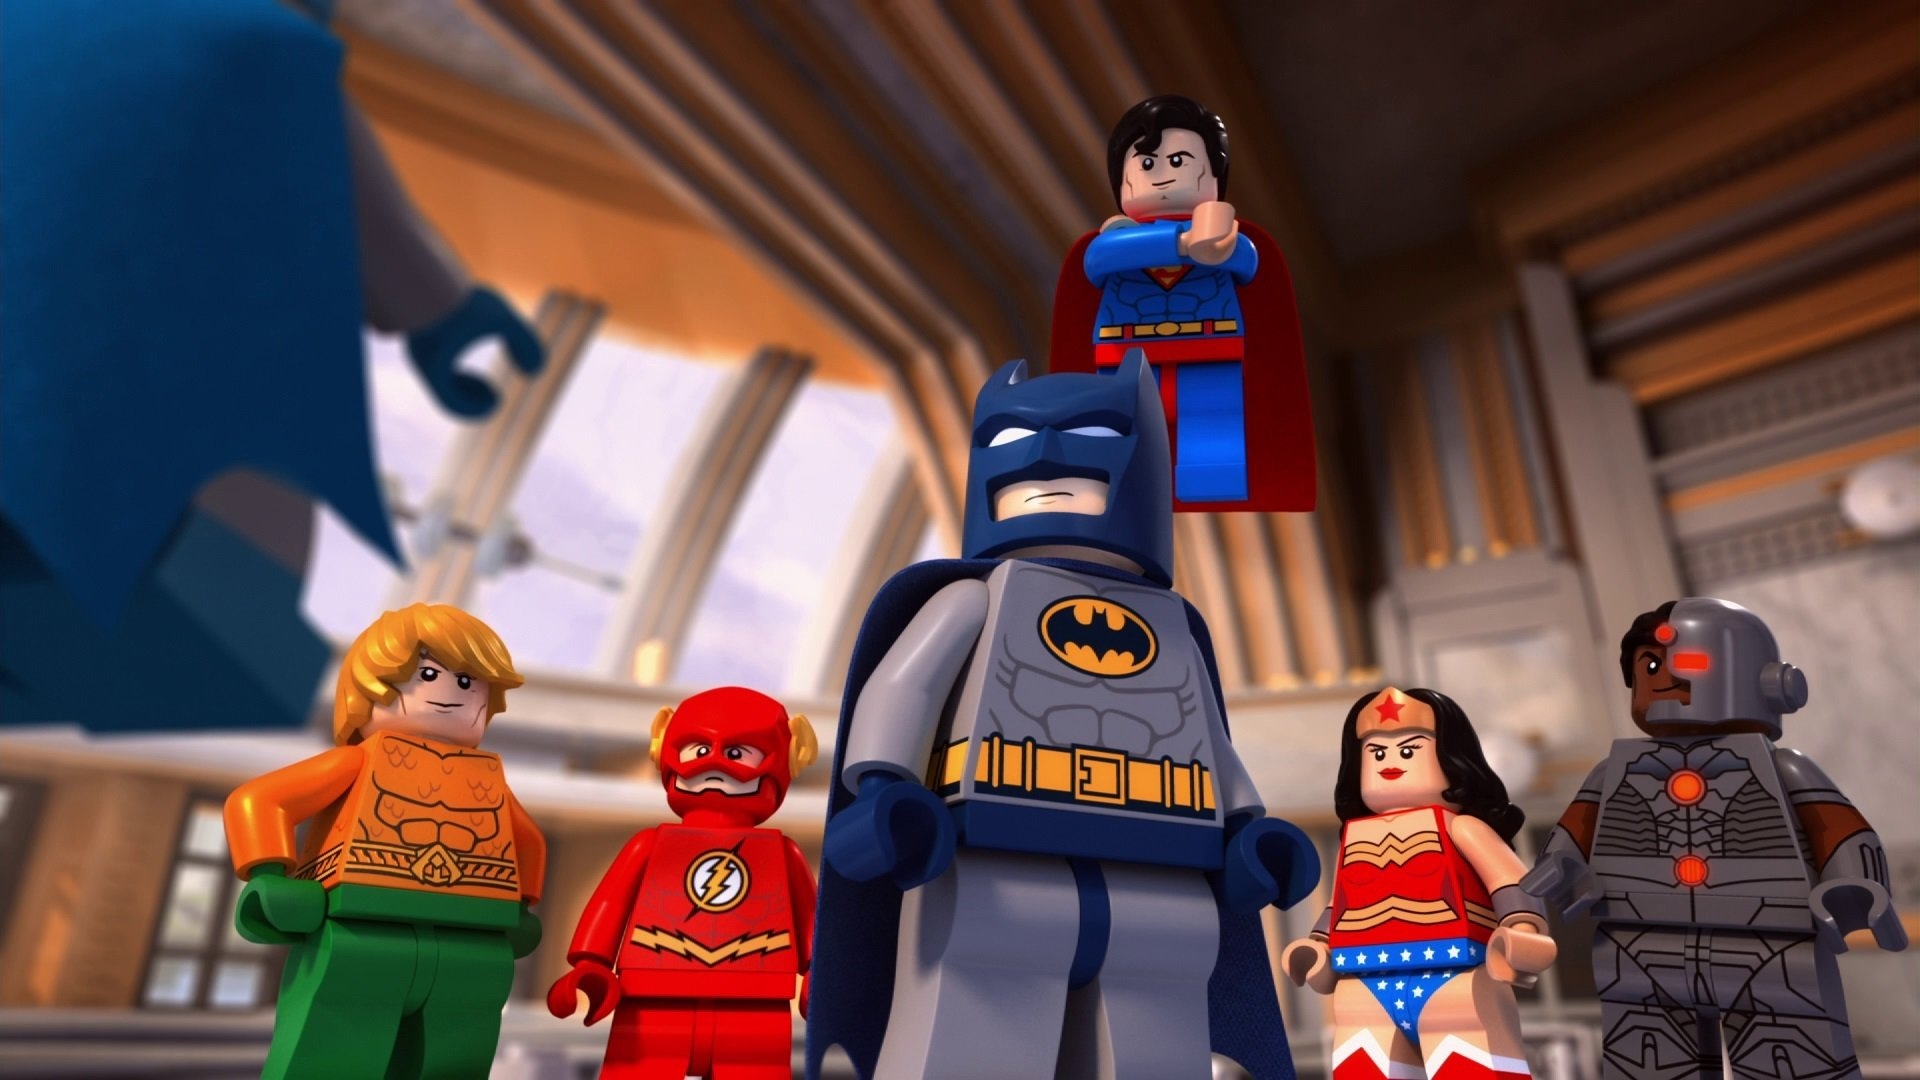 Descarga gratuita de fondo de pantalla para móvil de Lego, Superhombre, Destello, Películas, Hombre Murciélago, Aquamán, La Mujer Maravilla, Cyborg (Dc Cómics), Lego Dc Comics: Batman Asediado.